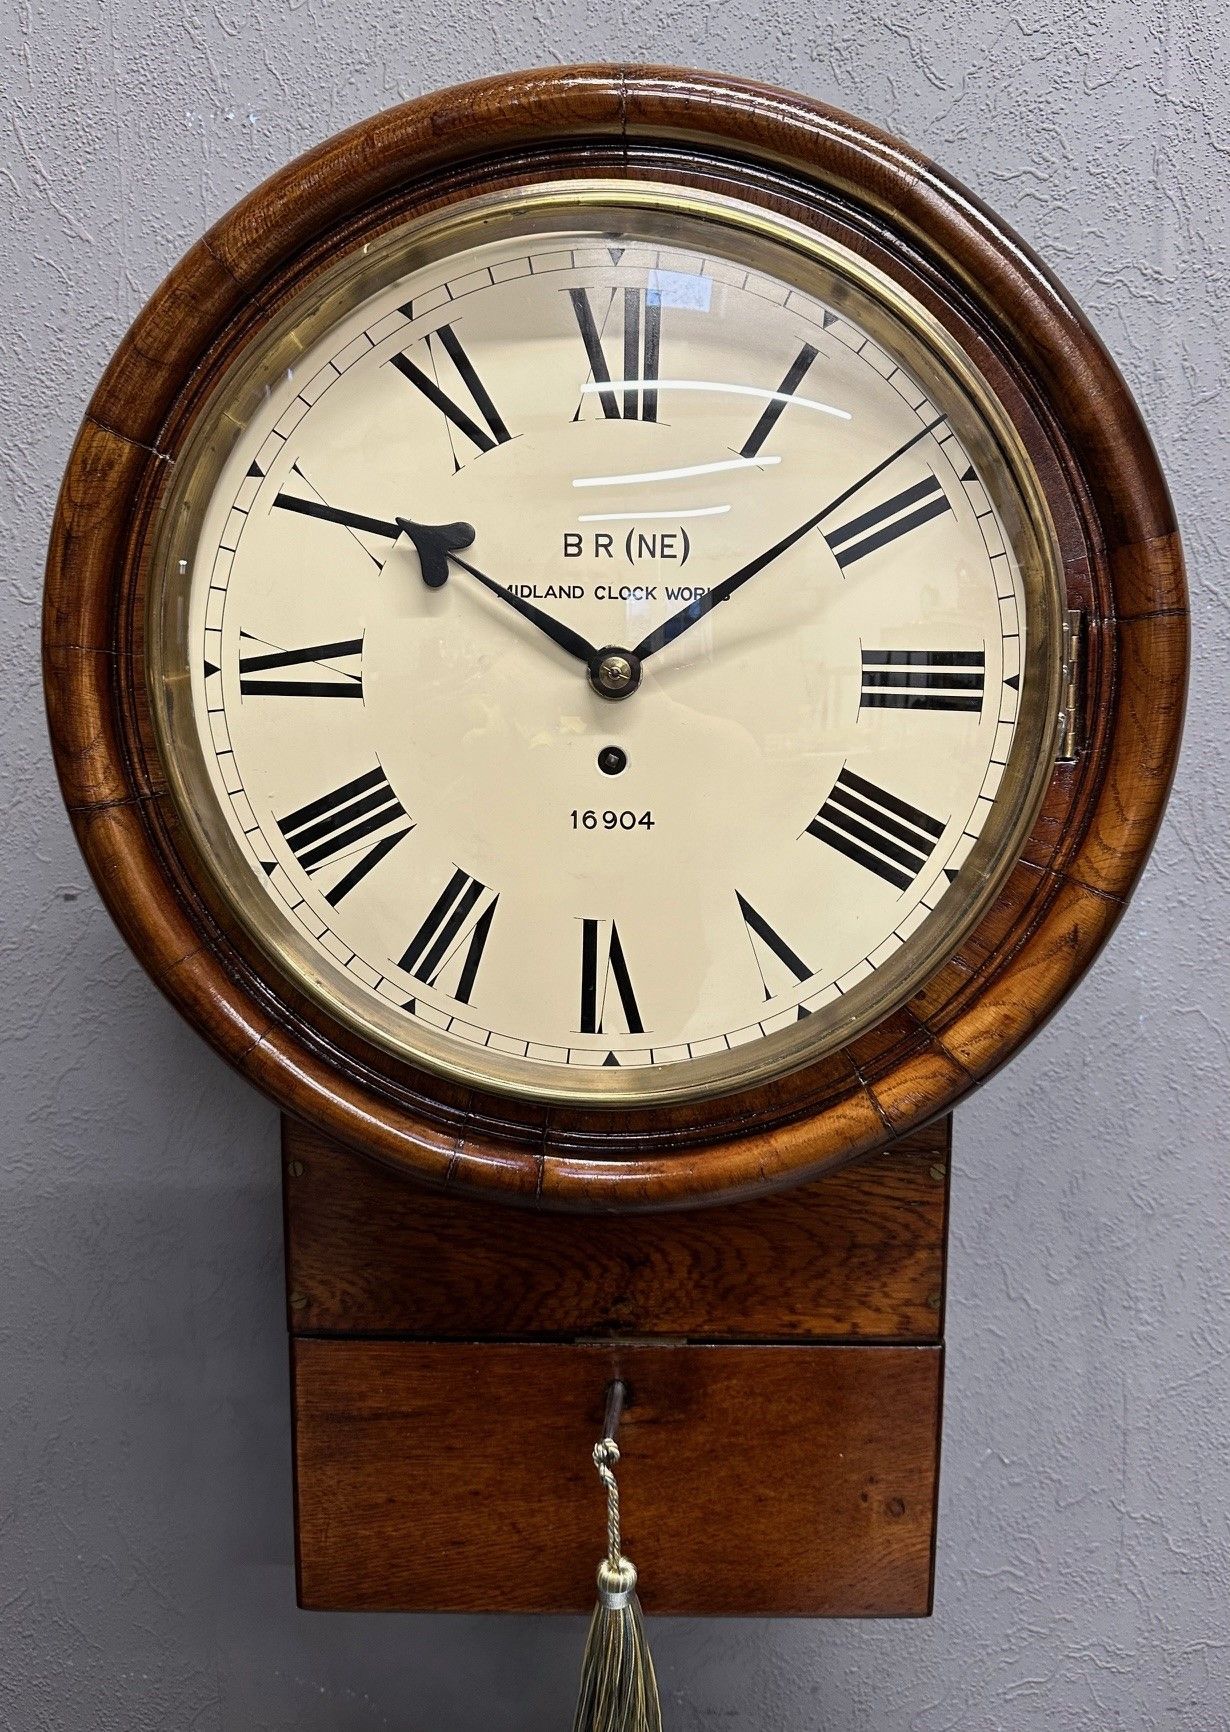 BR (NE) Midland Clock Works Fusee Wall Clock 1